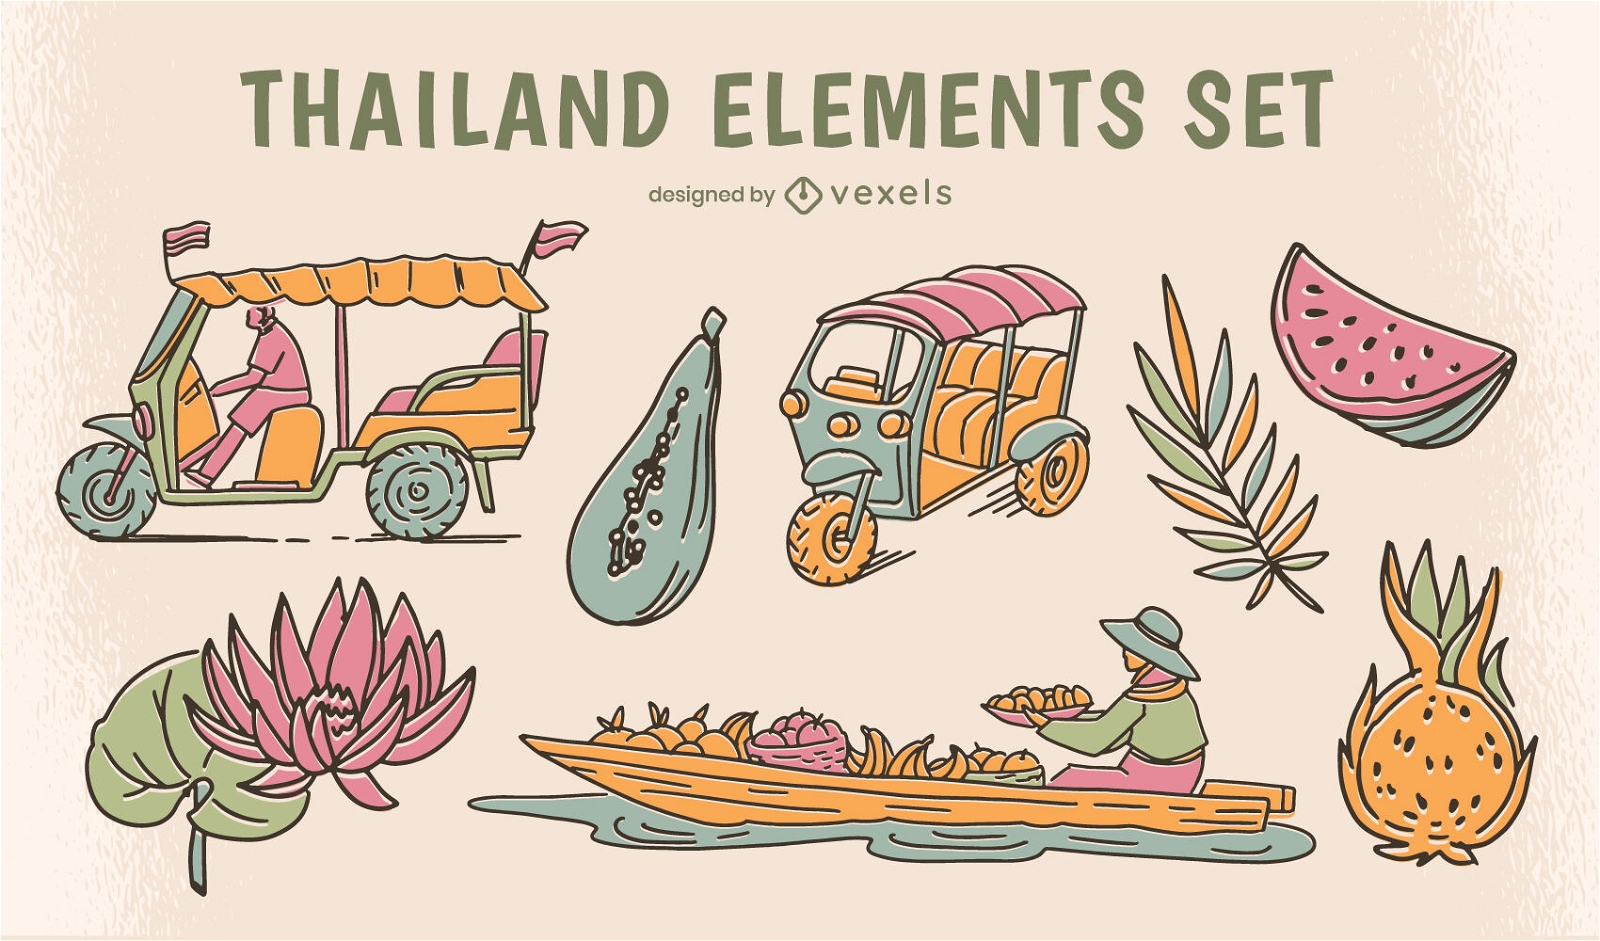 Thailand culture elements set